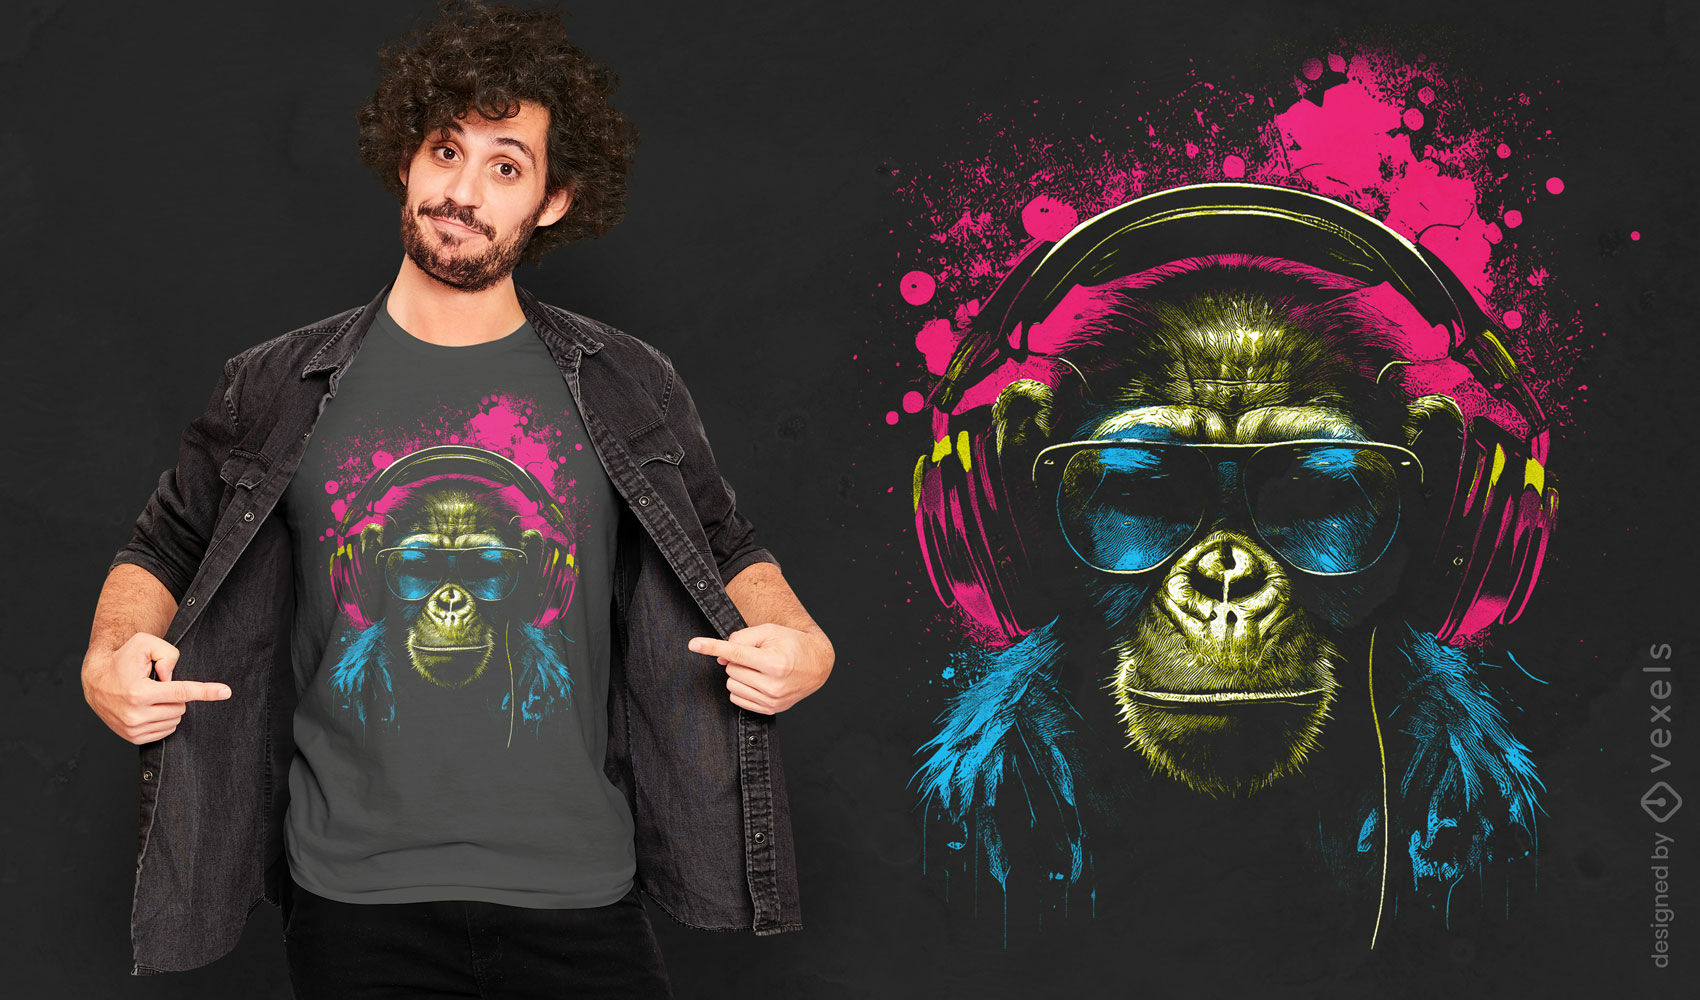 Cool monkey with headphones t-shirt design